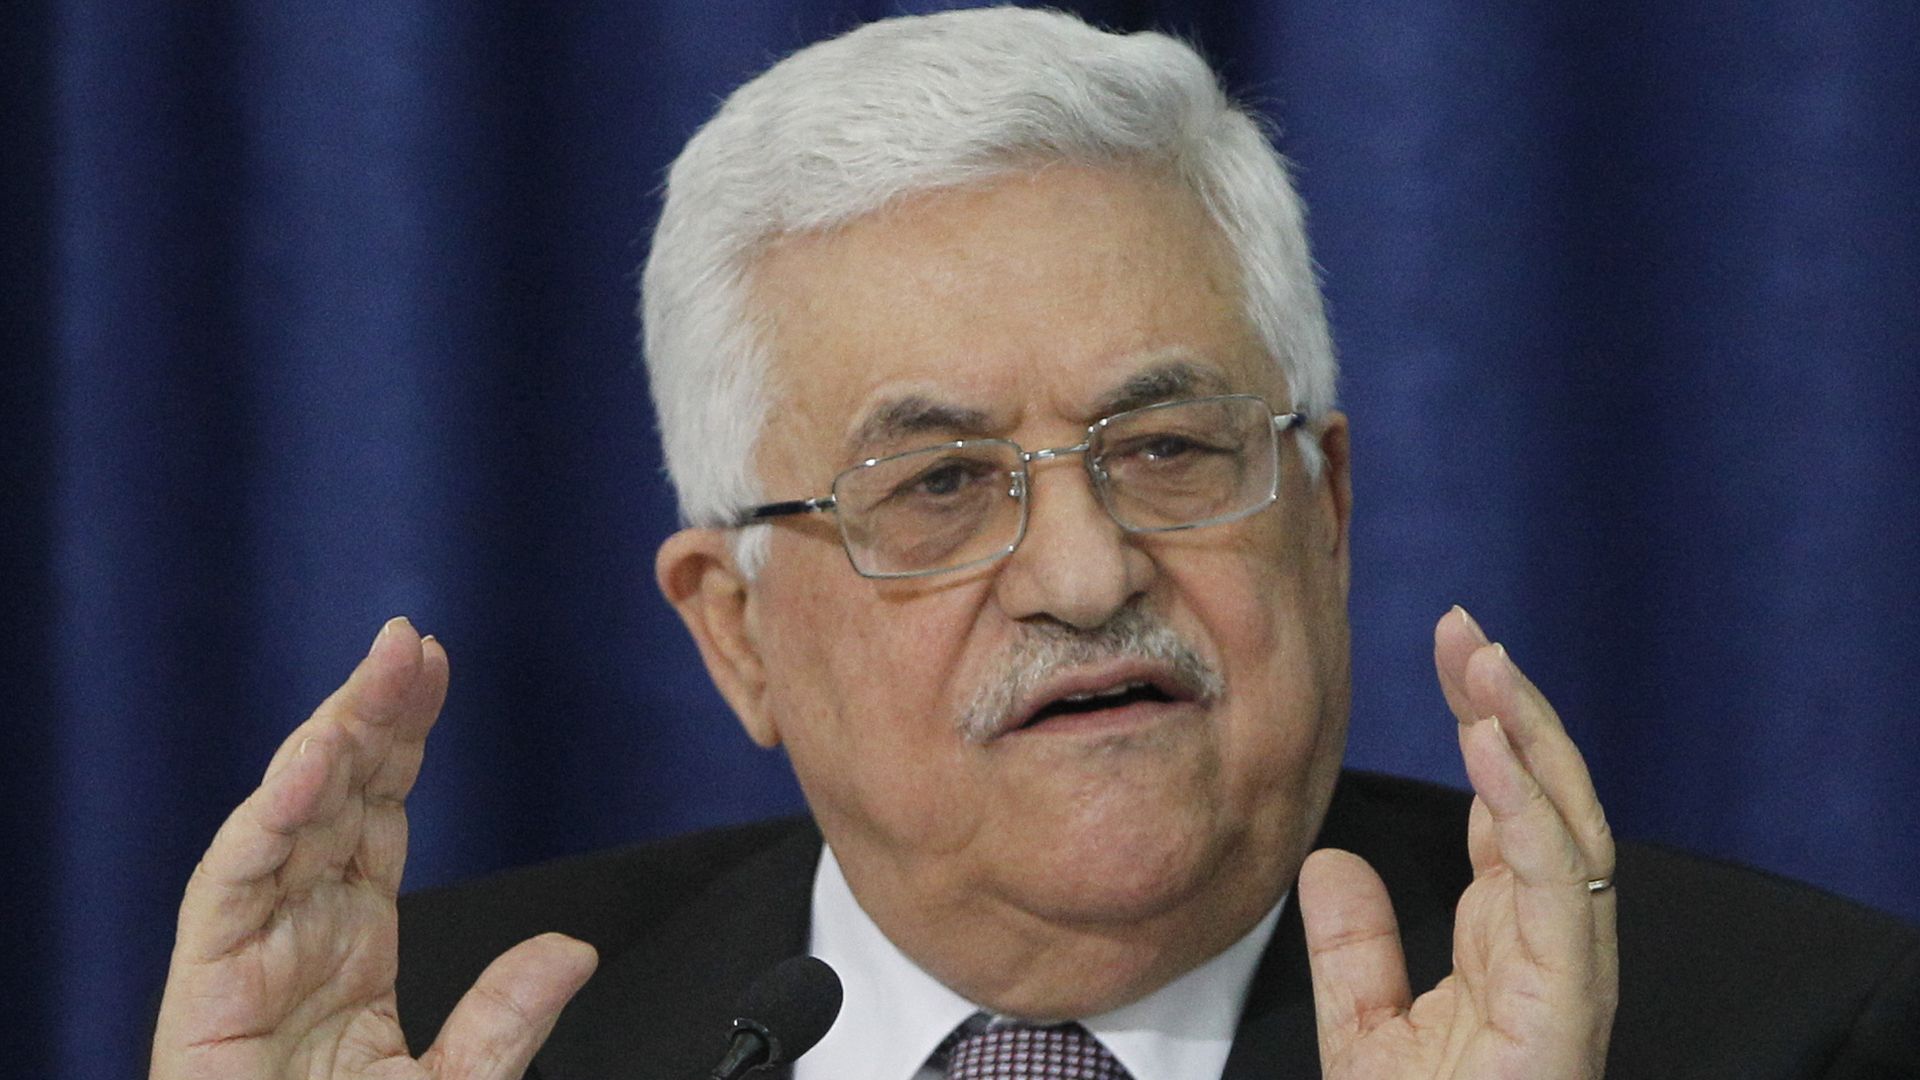 Palestinian President Abbas